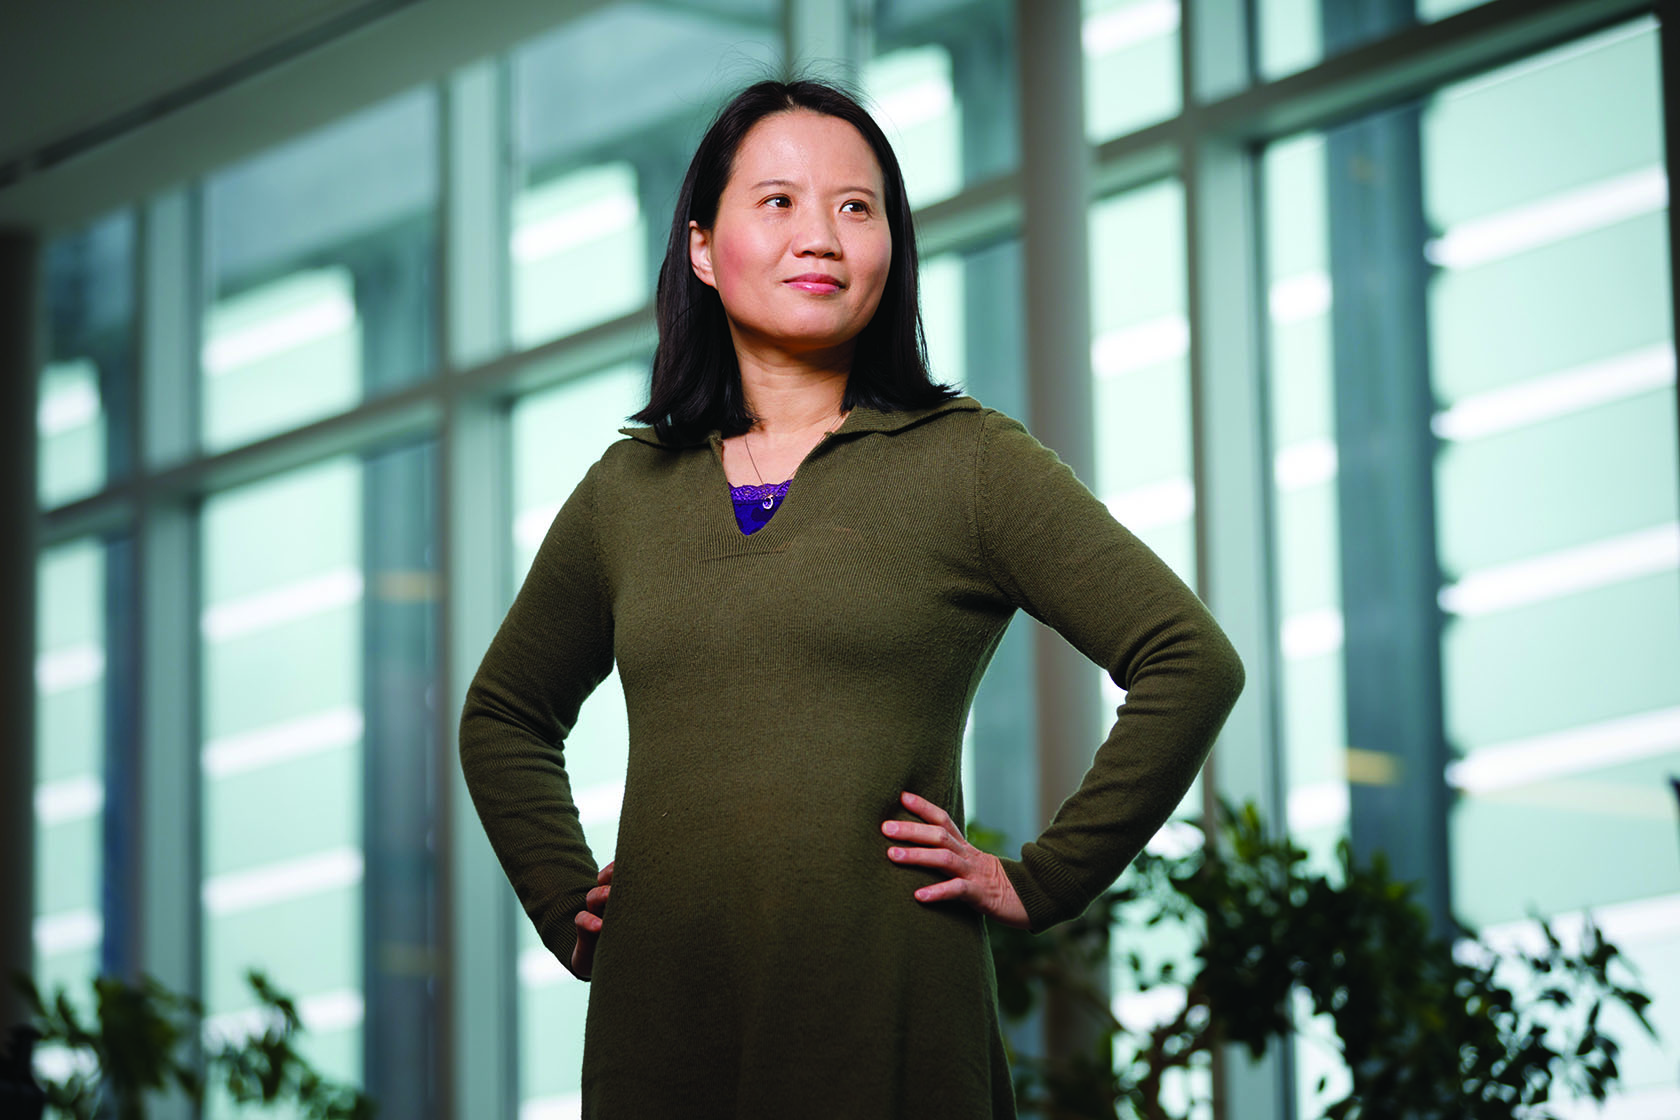 Women in STEM: Four UNMC trailblazers – Daisy Dai, PhD